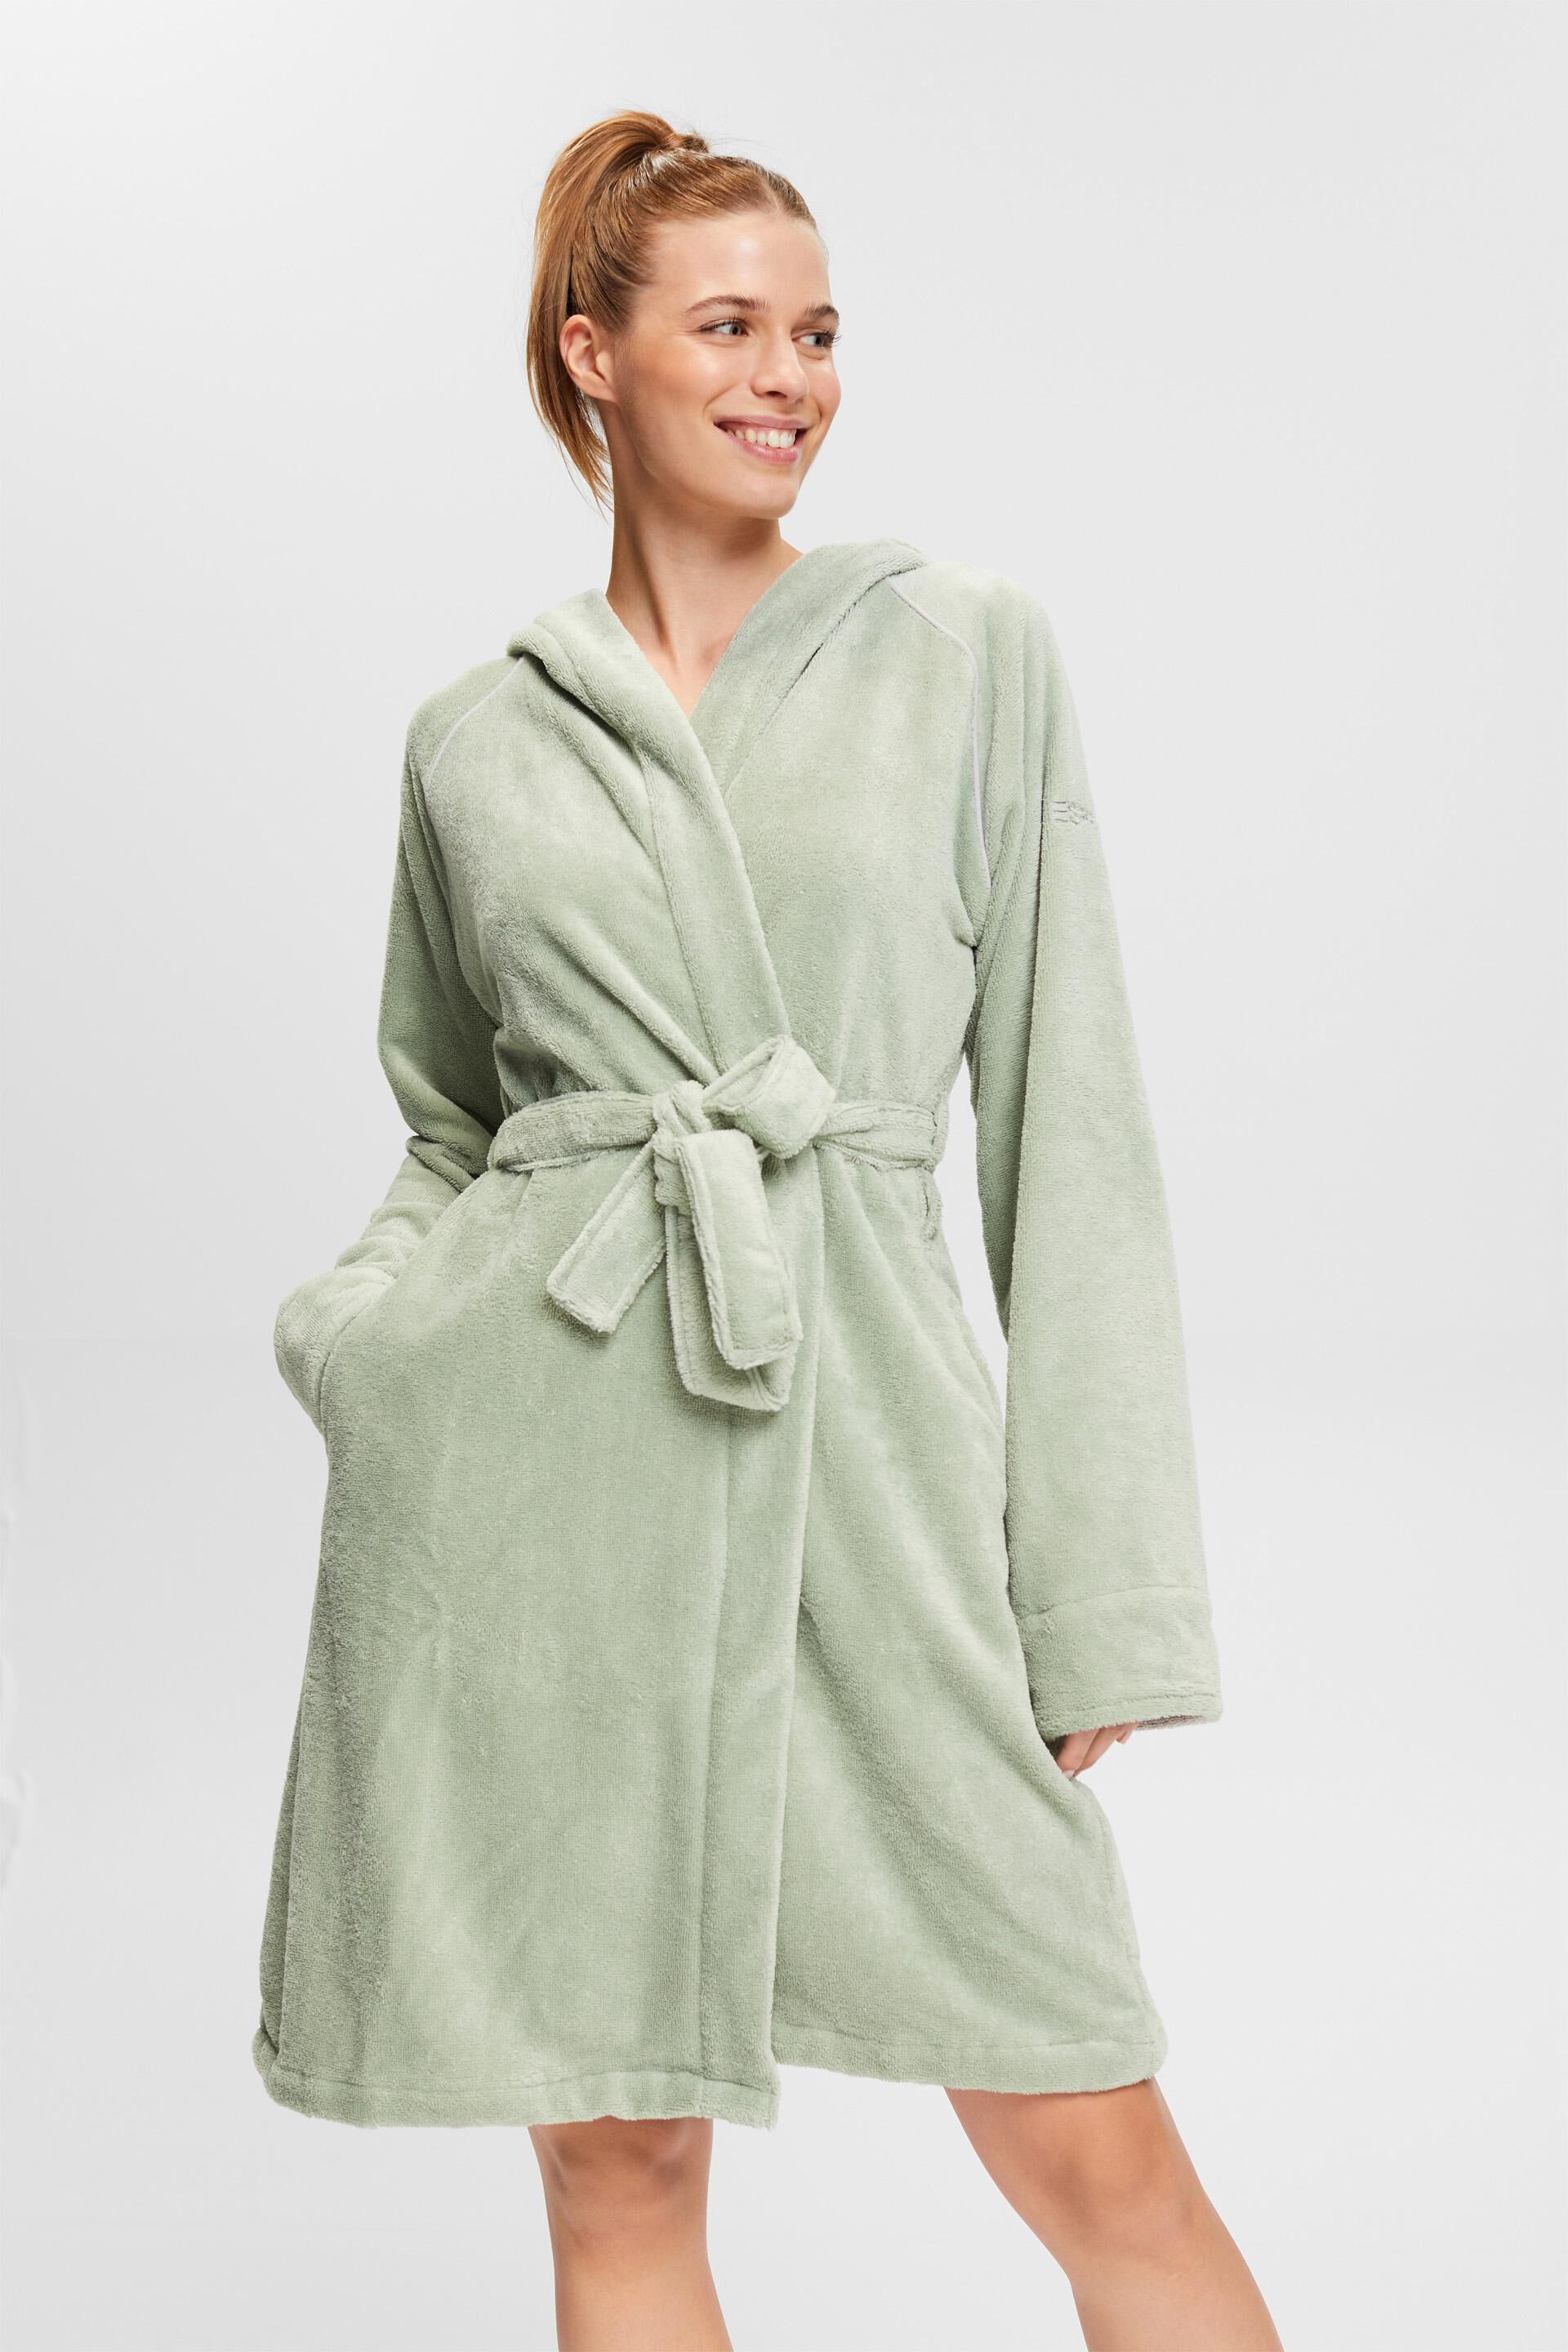 Esprit cloth hood with Terry bathrobe